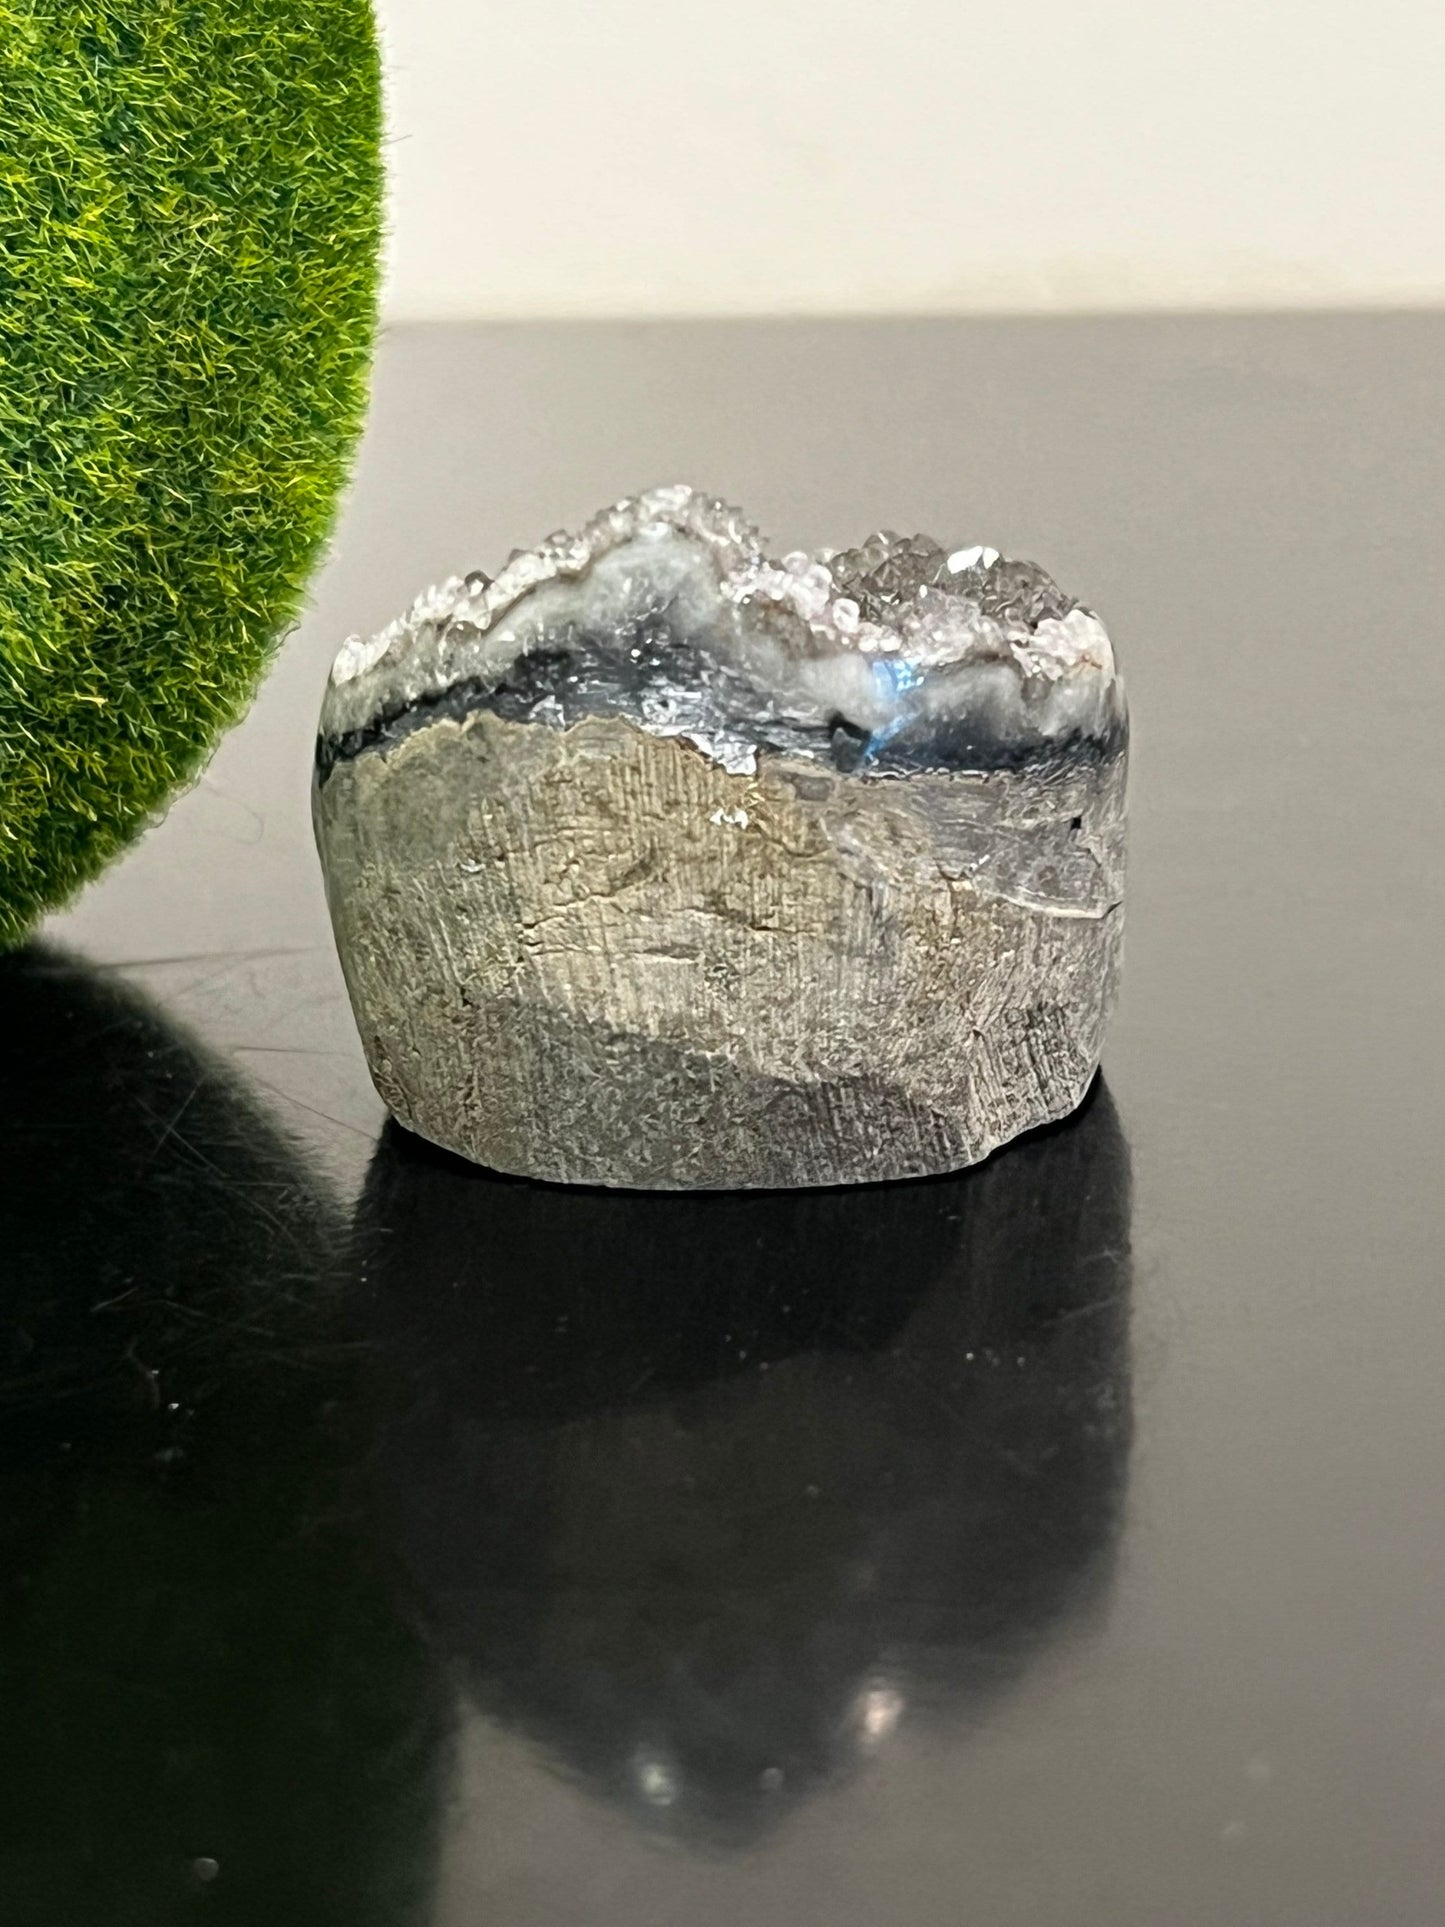 Black/Gray Amethyst Cluster Geode